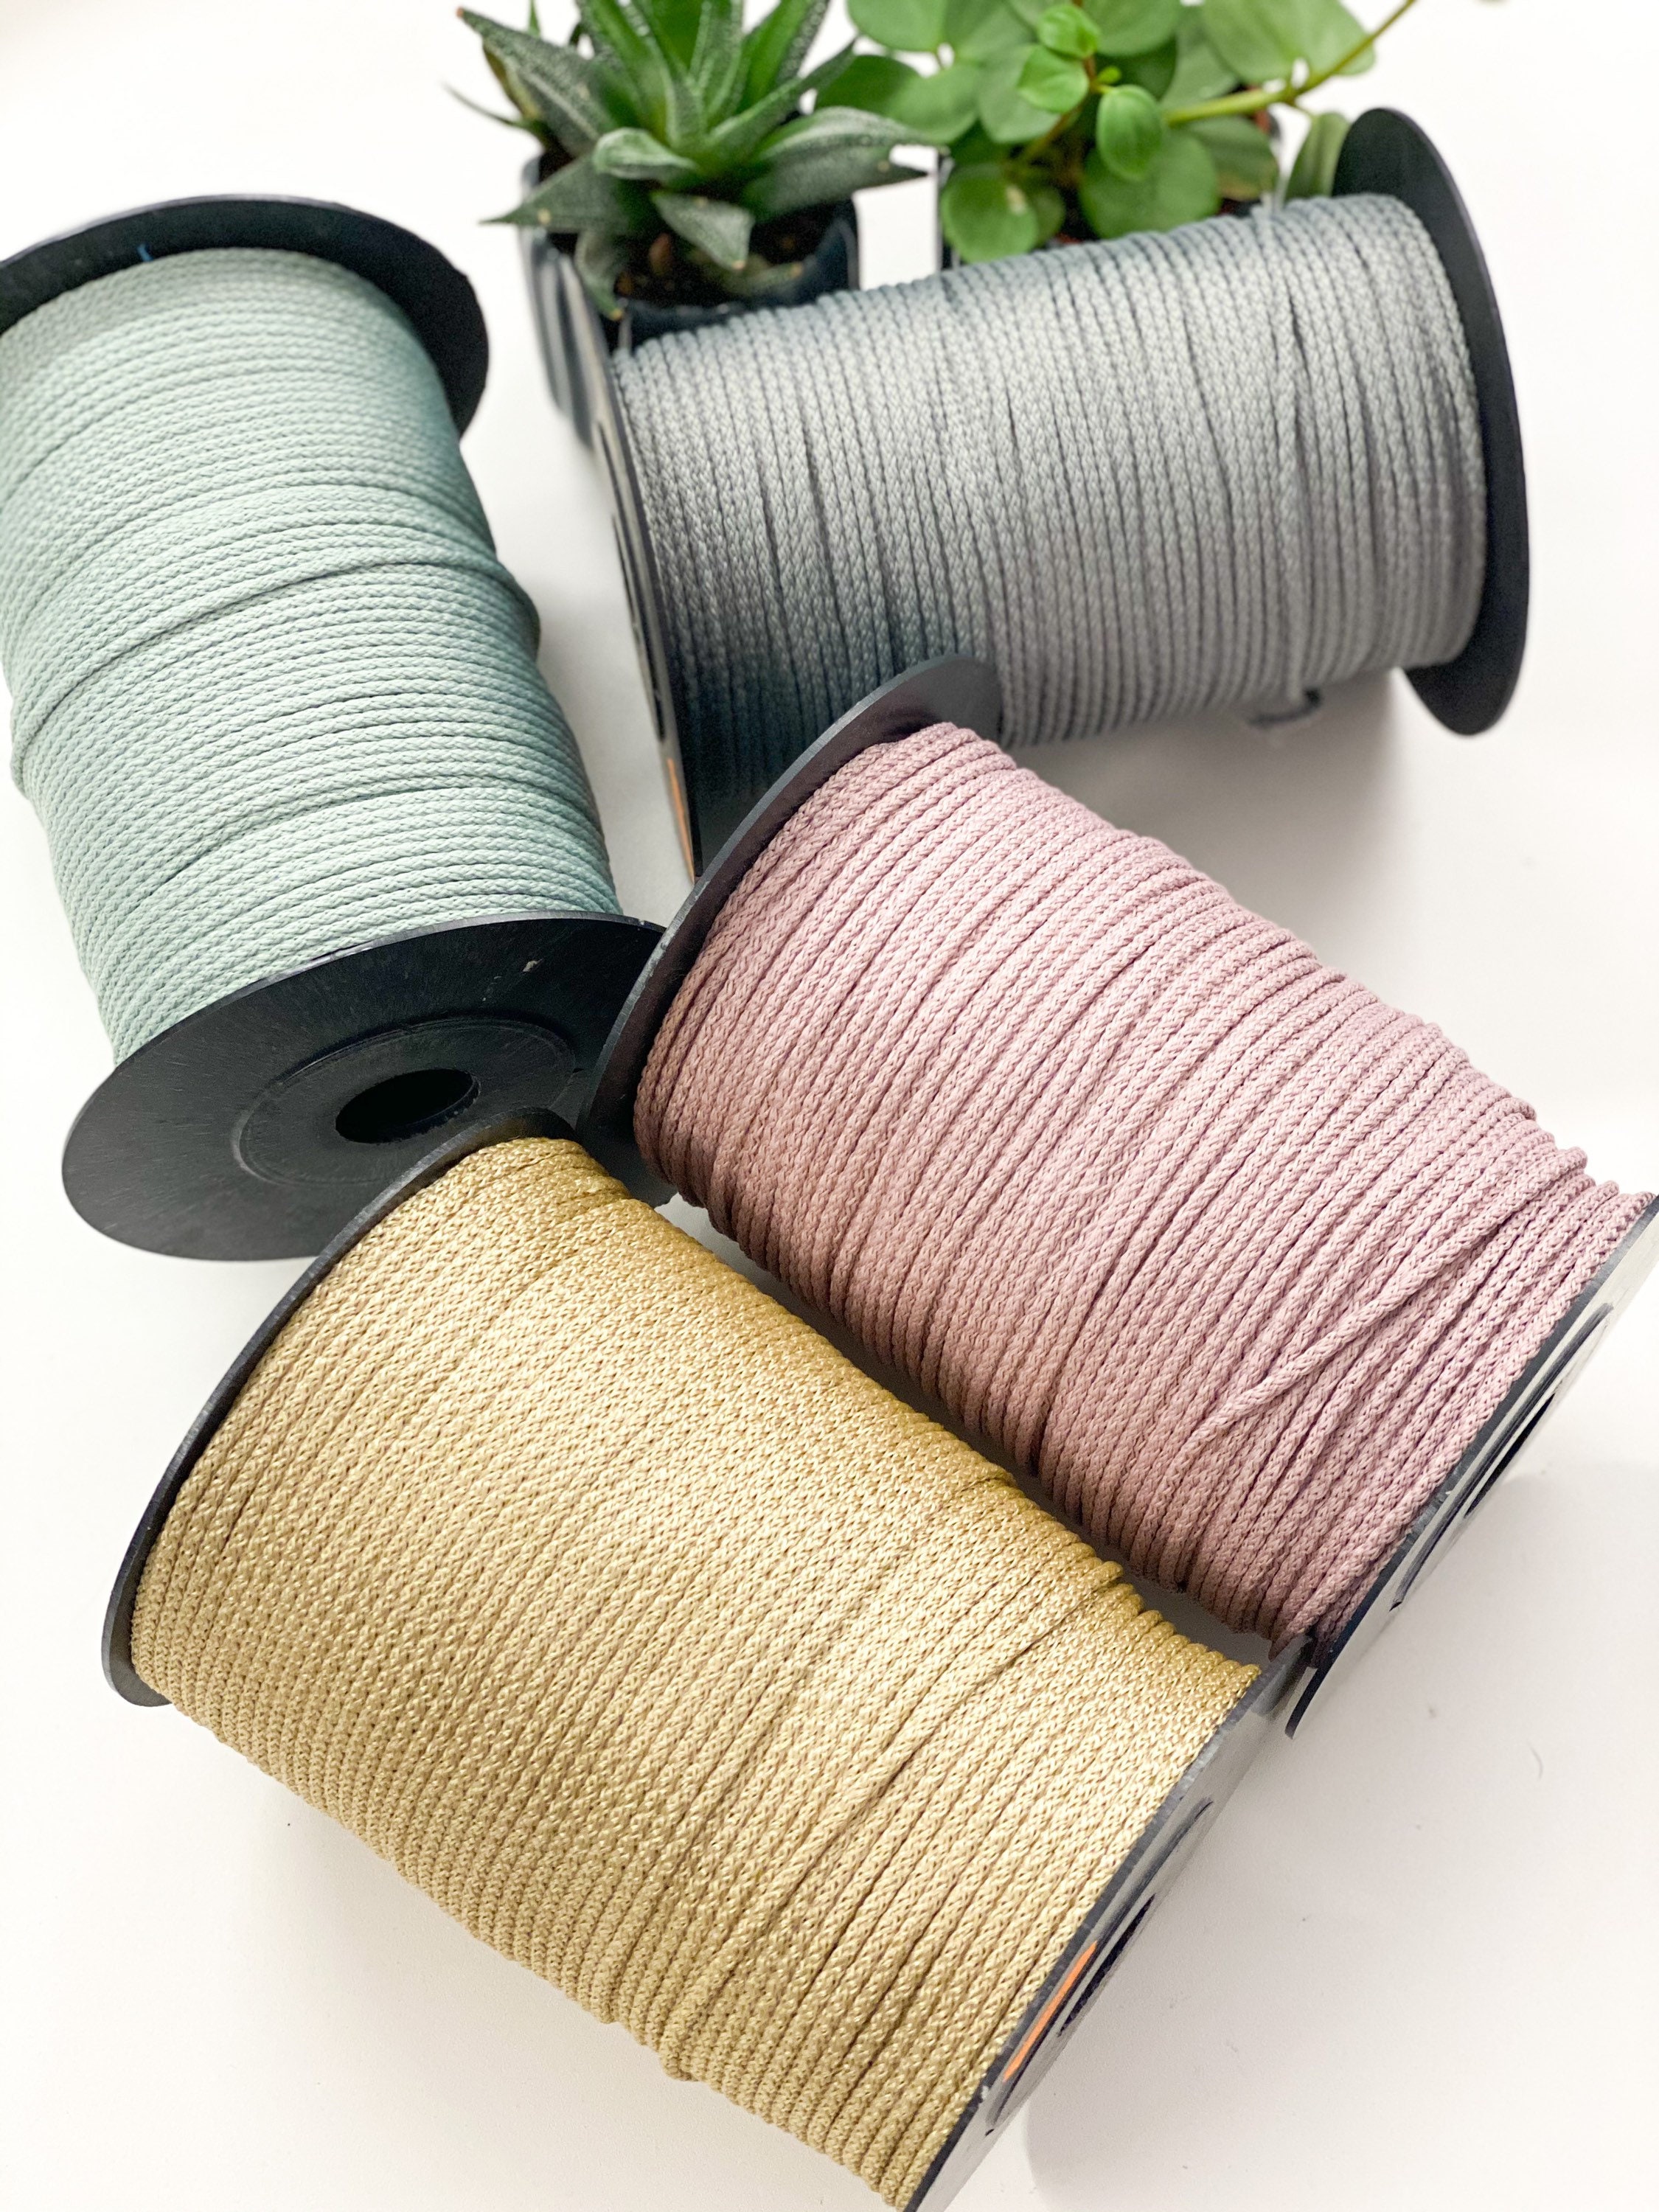 3mm Nylon Cord Braided Macrame Cord 200g, 219 Yards - 100% Nylon Cord - Soft Cord for Macrame Projects - 3mm Crochet Bag Cord - Macrame Rope - Crochet